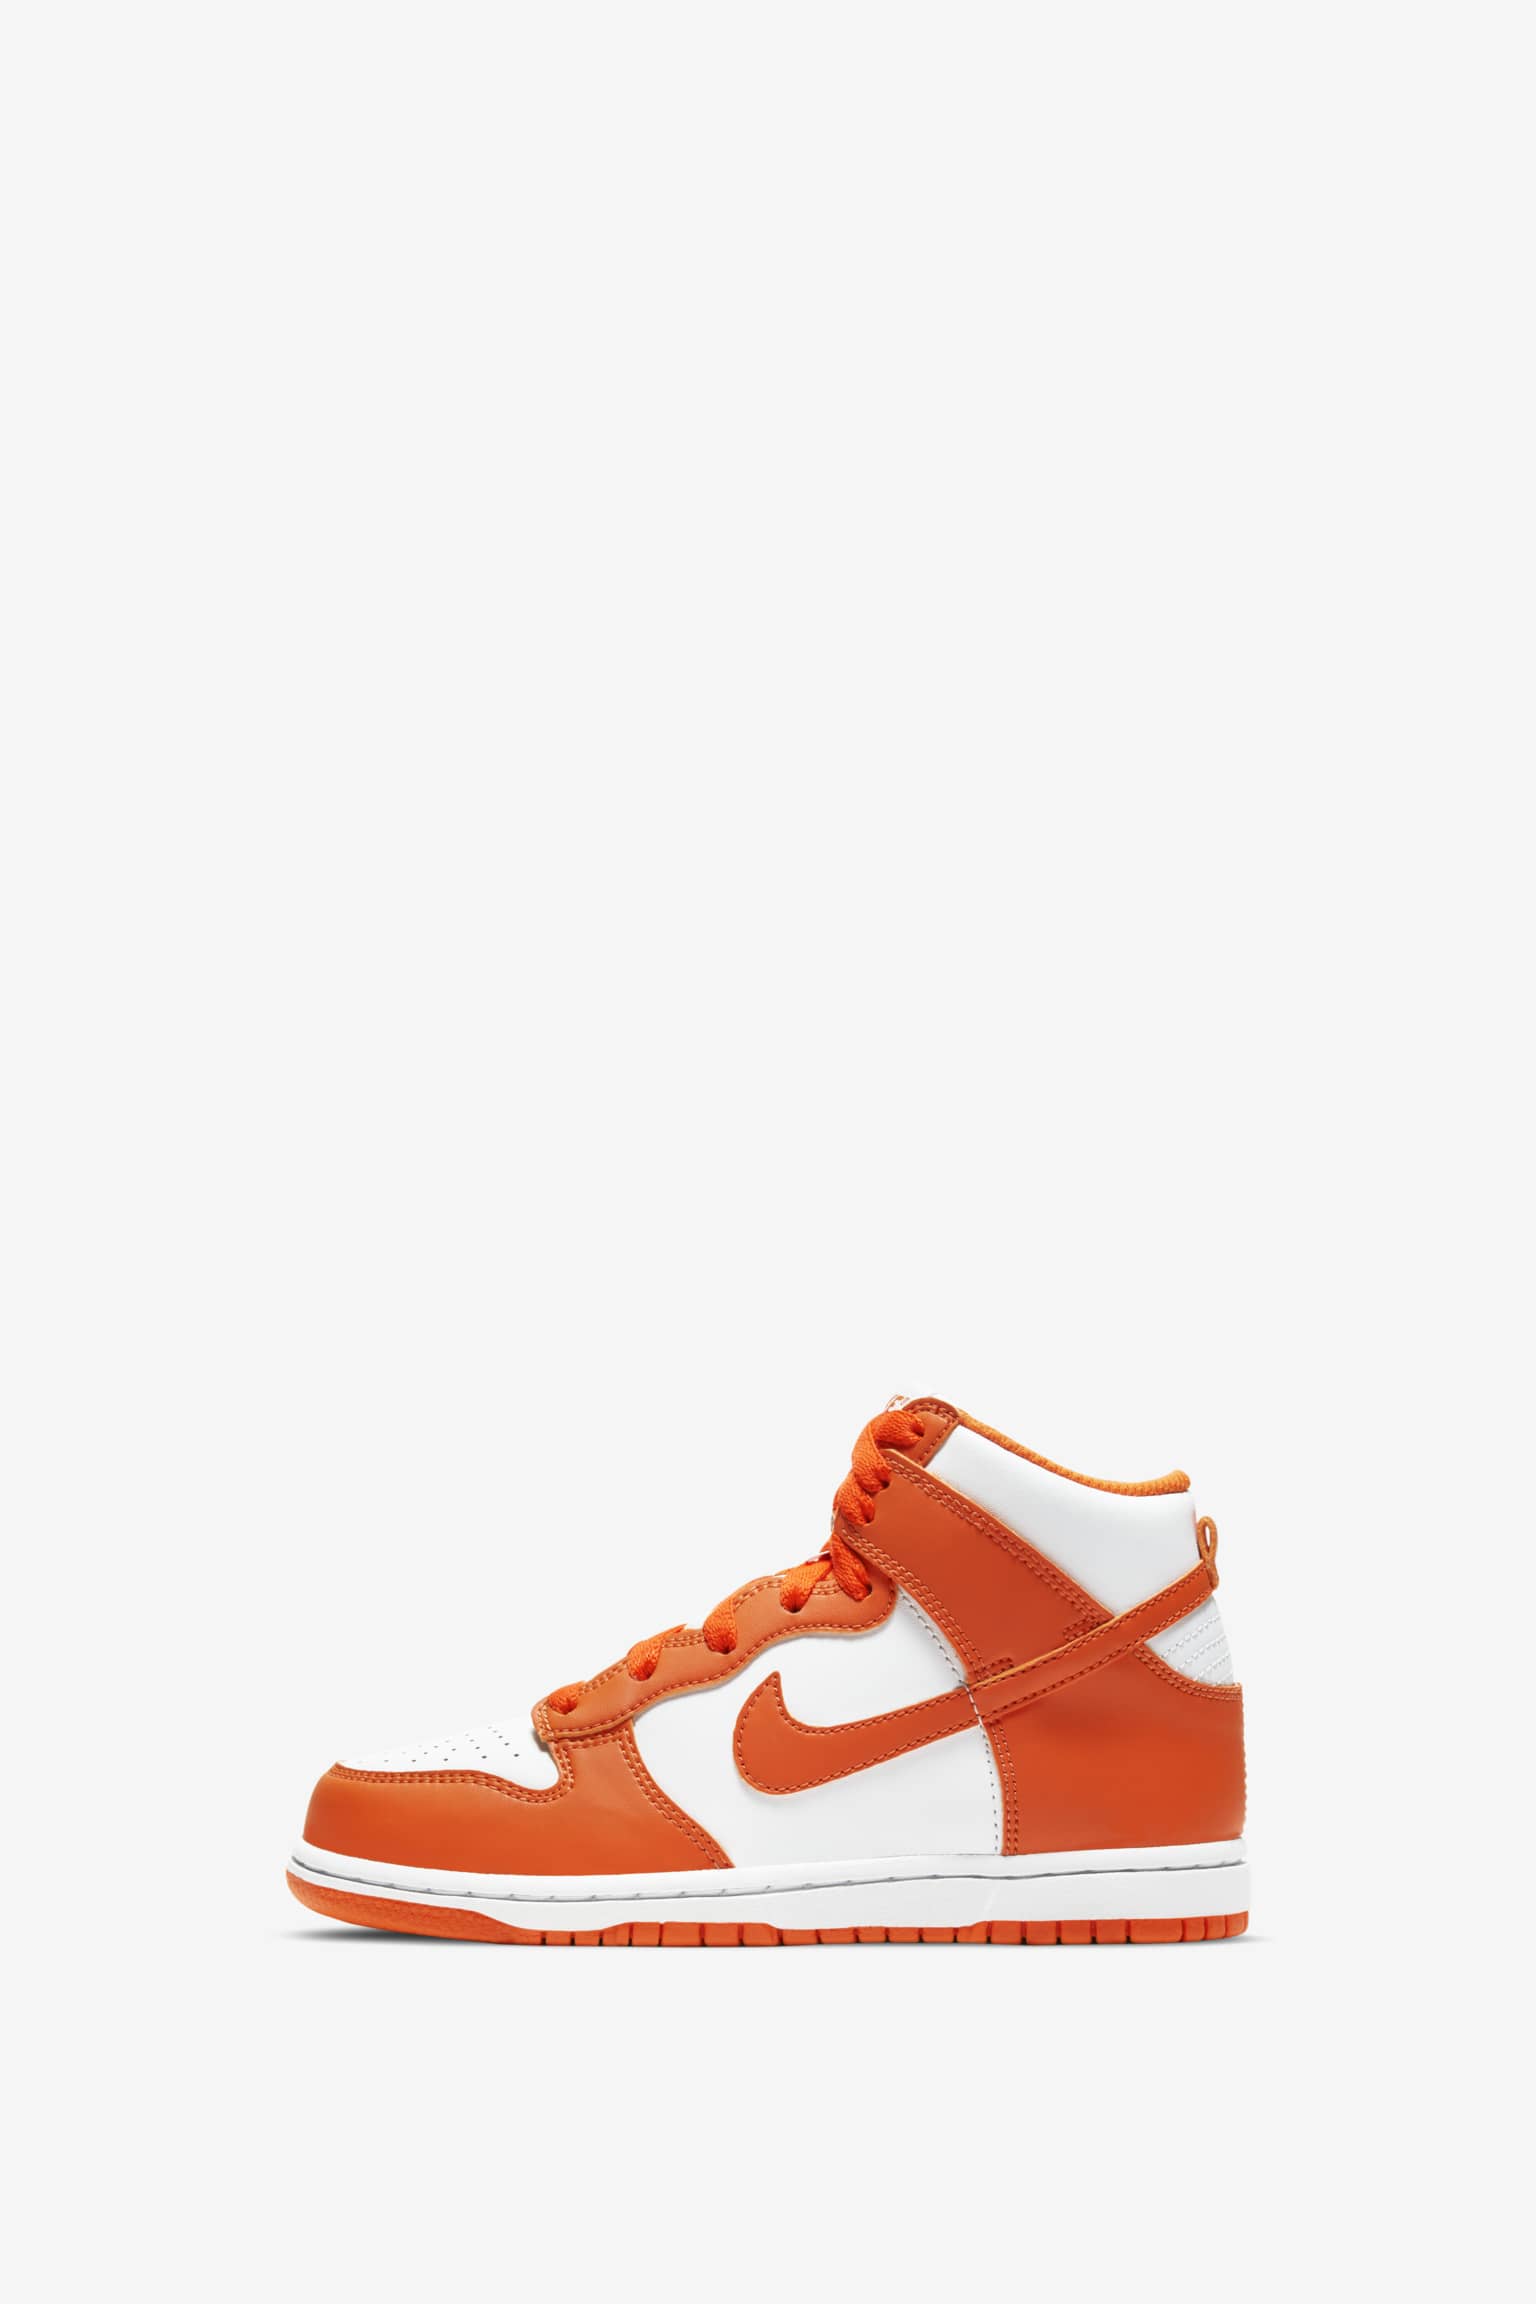 Dunk High 'Orange Blaze' Release Date. Nike SNKRS IN